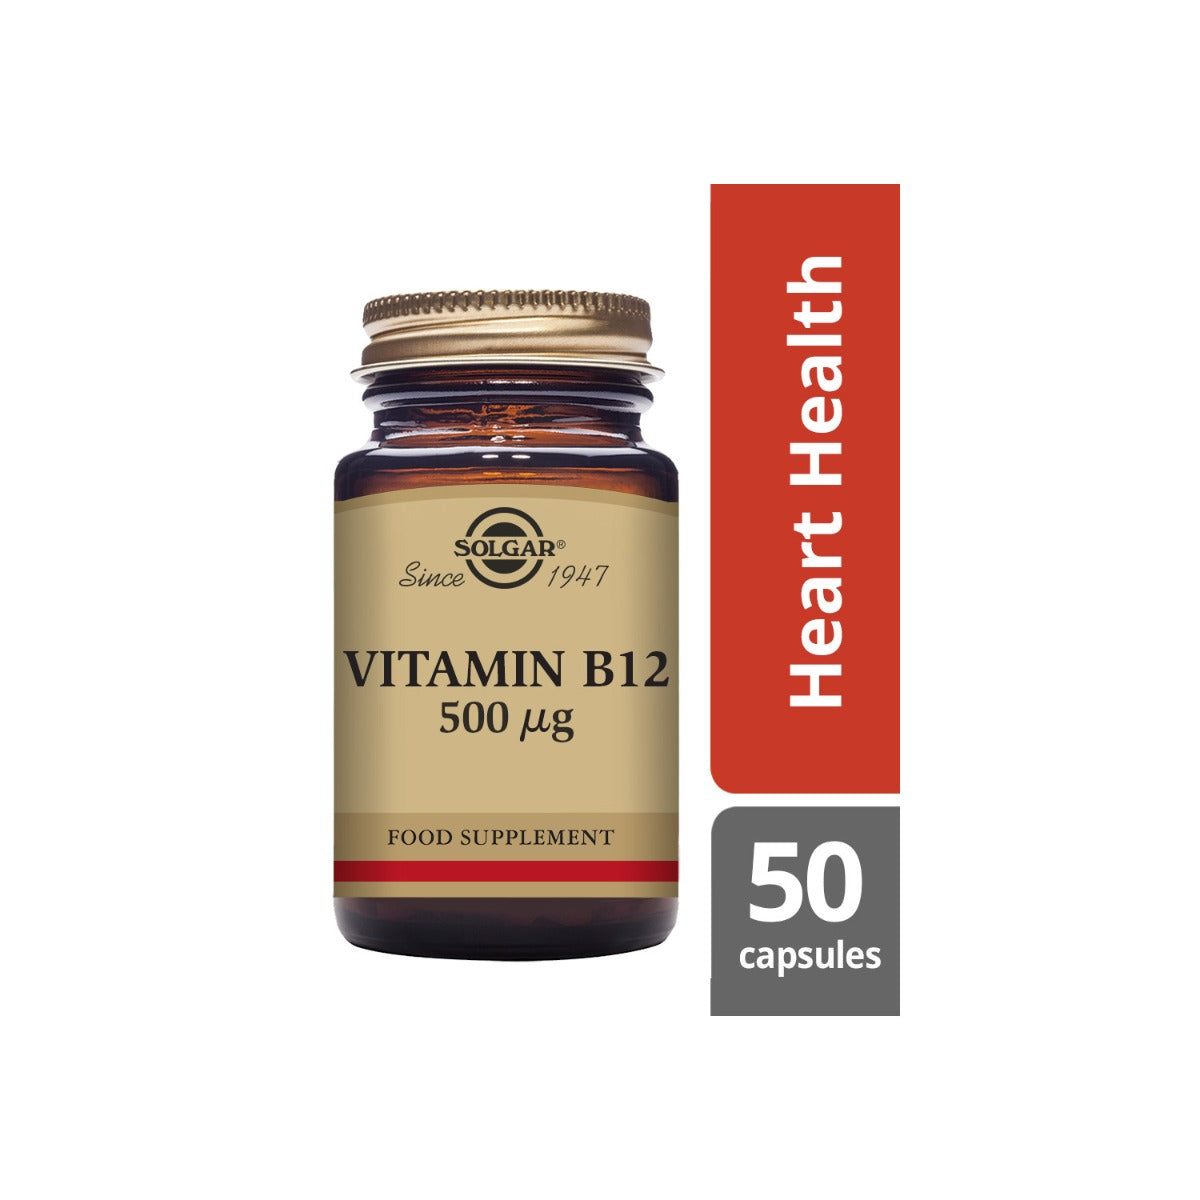 Solgar® Vitamin B12 500 µg Vegetable Capsules - Pack of 50